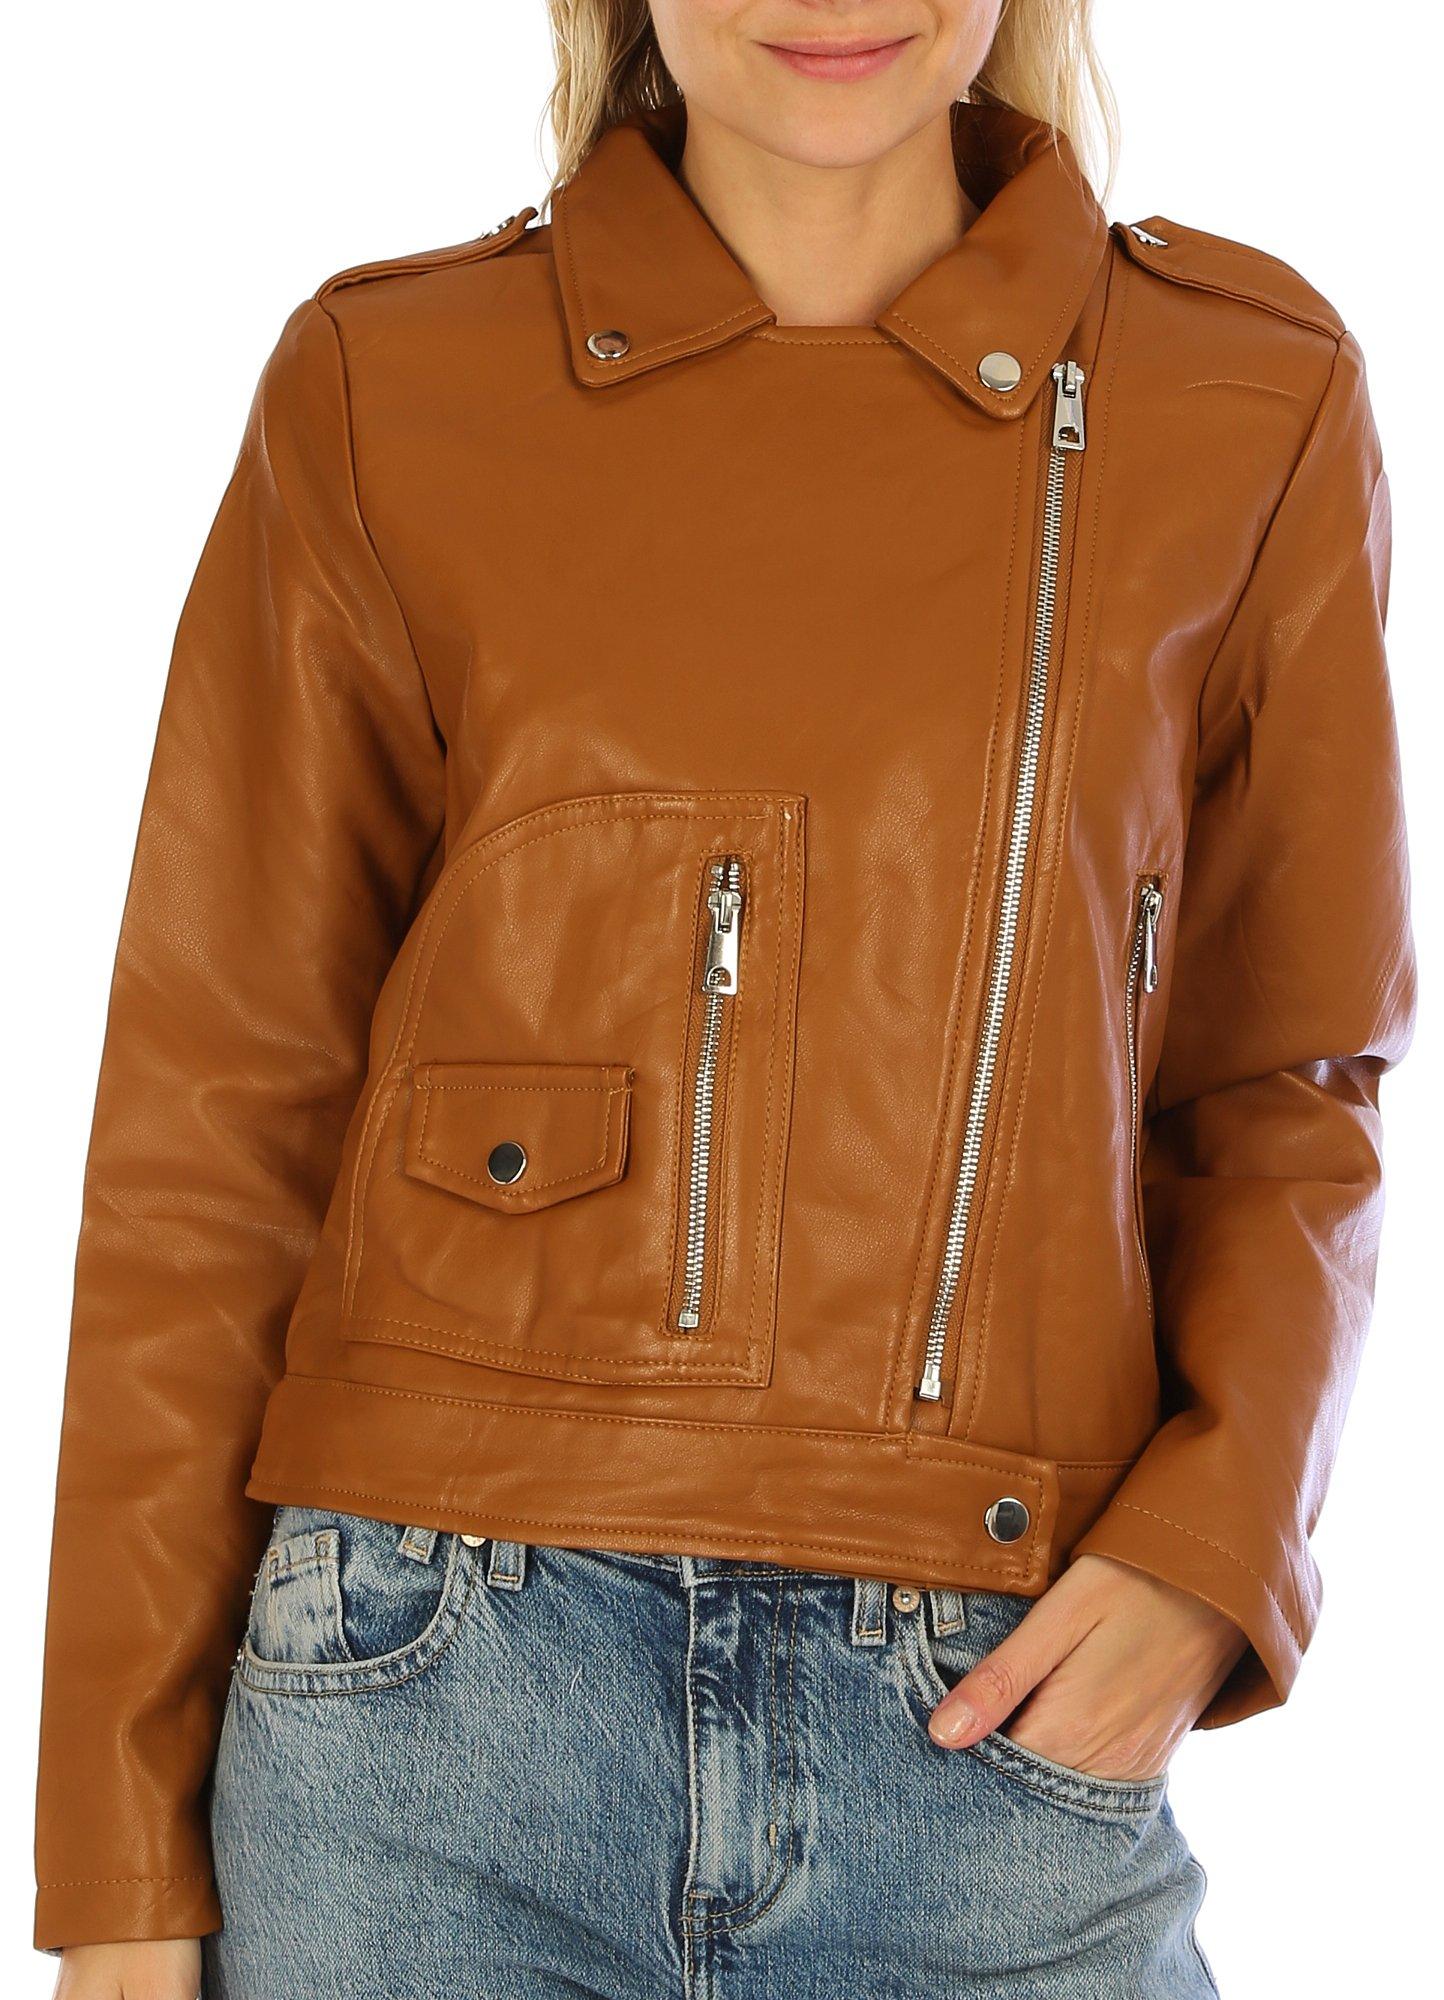 Juniors Faux Leather Jacket